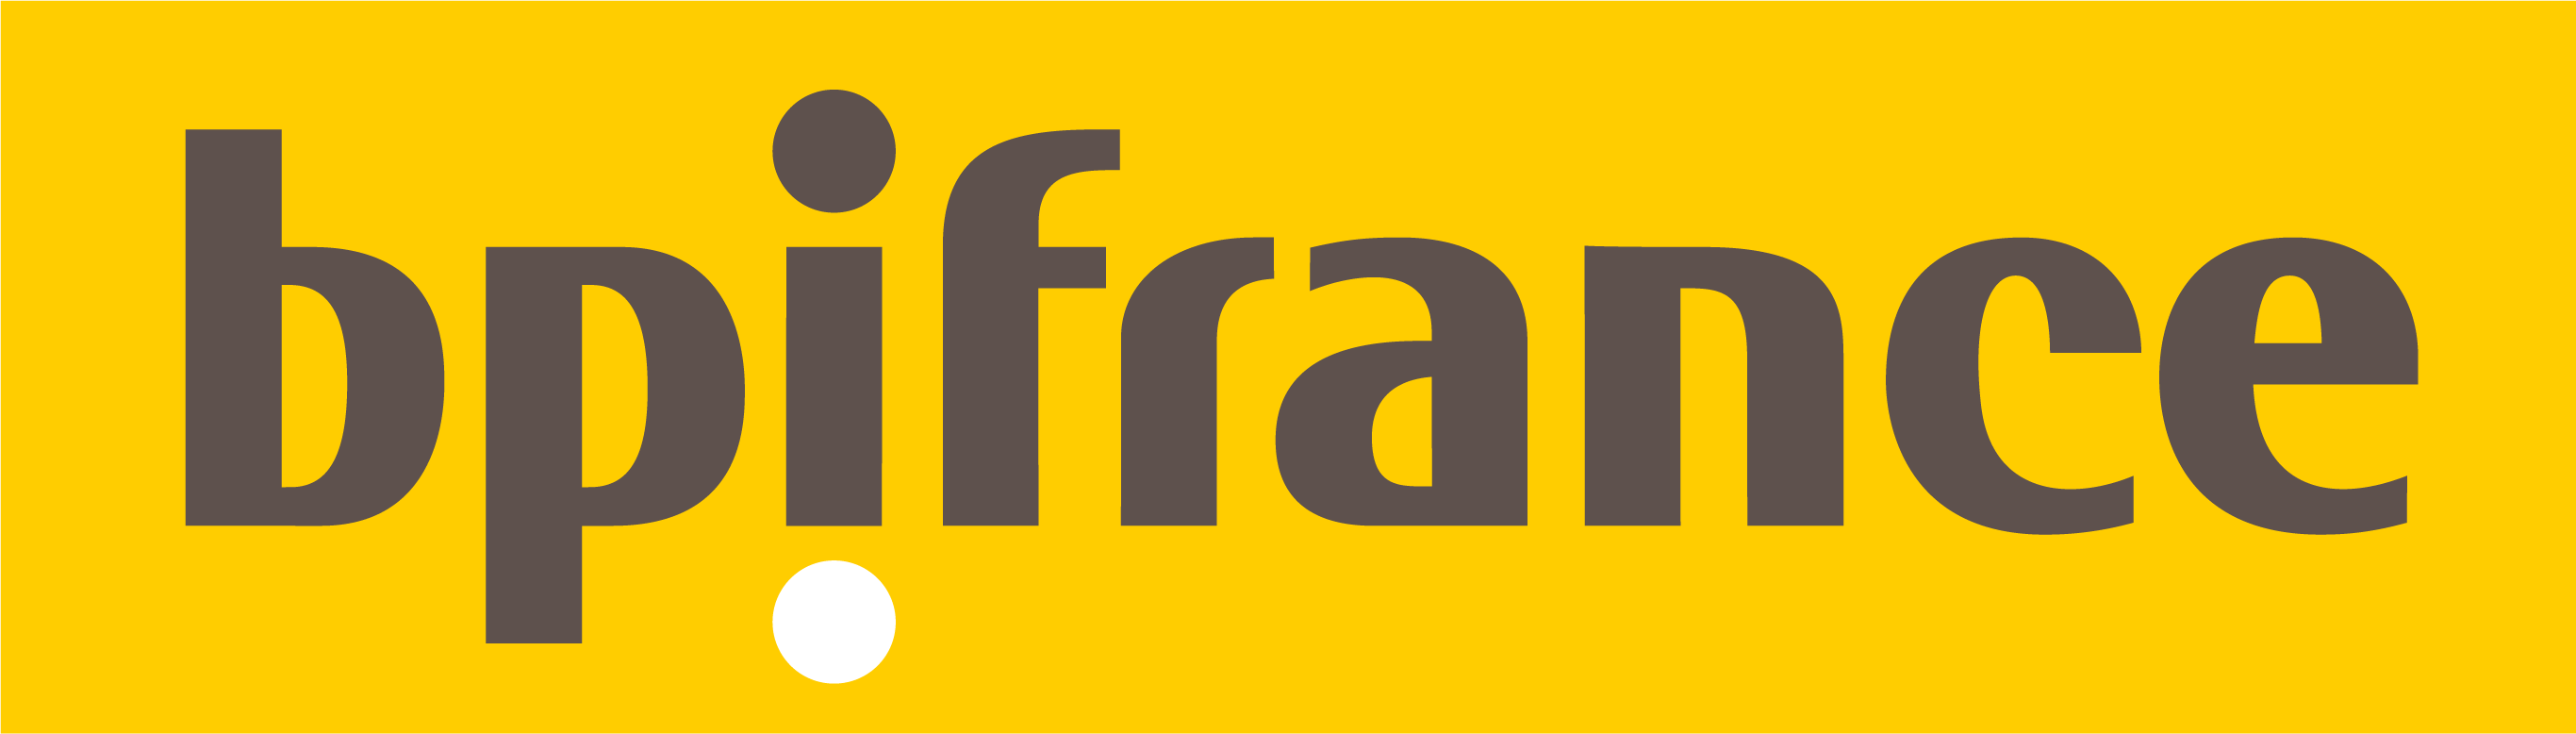 Logo Bpifrance Partenaire Sans Baseline Web